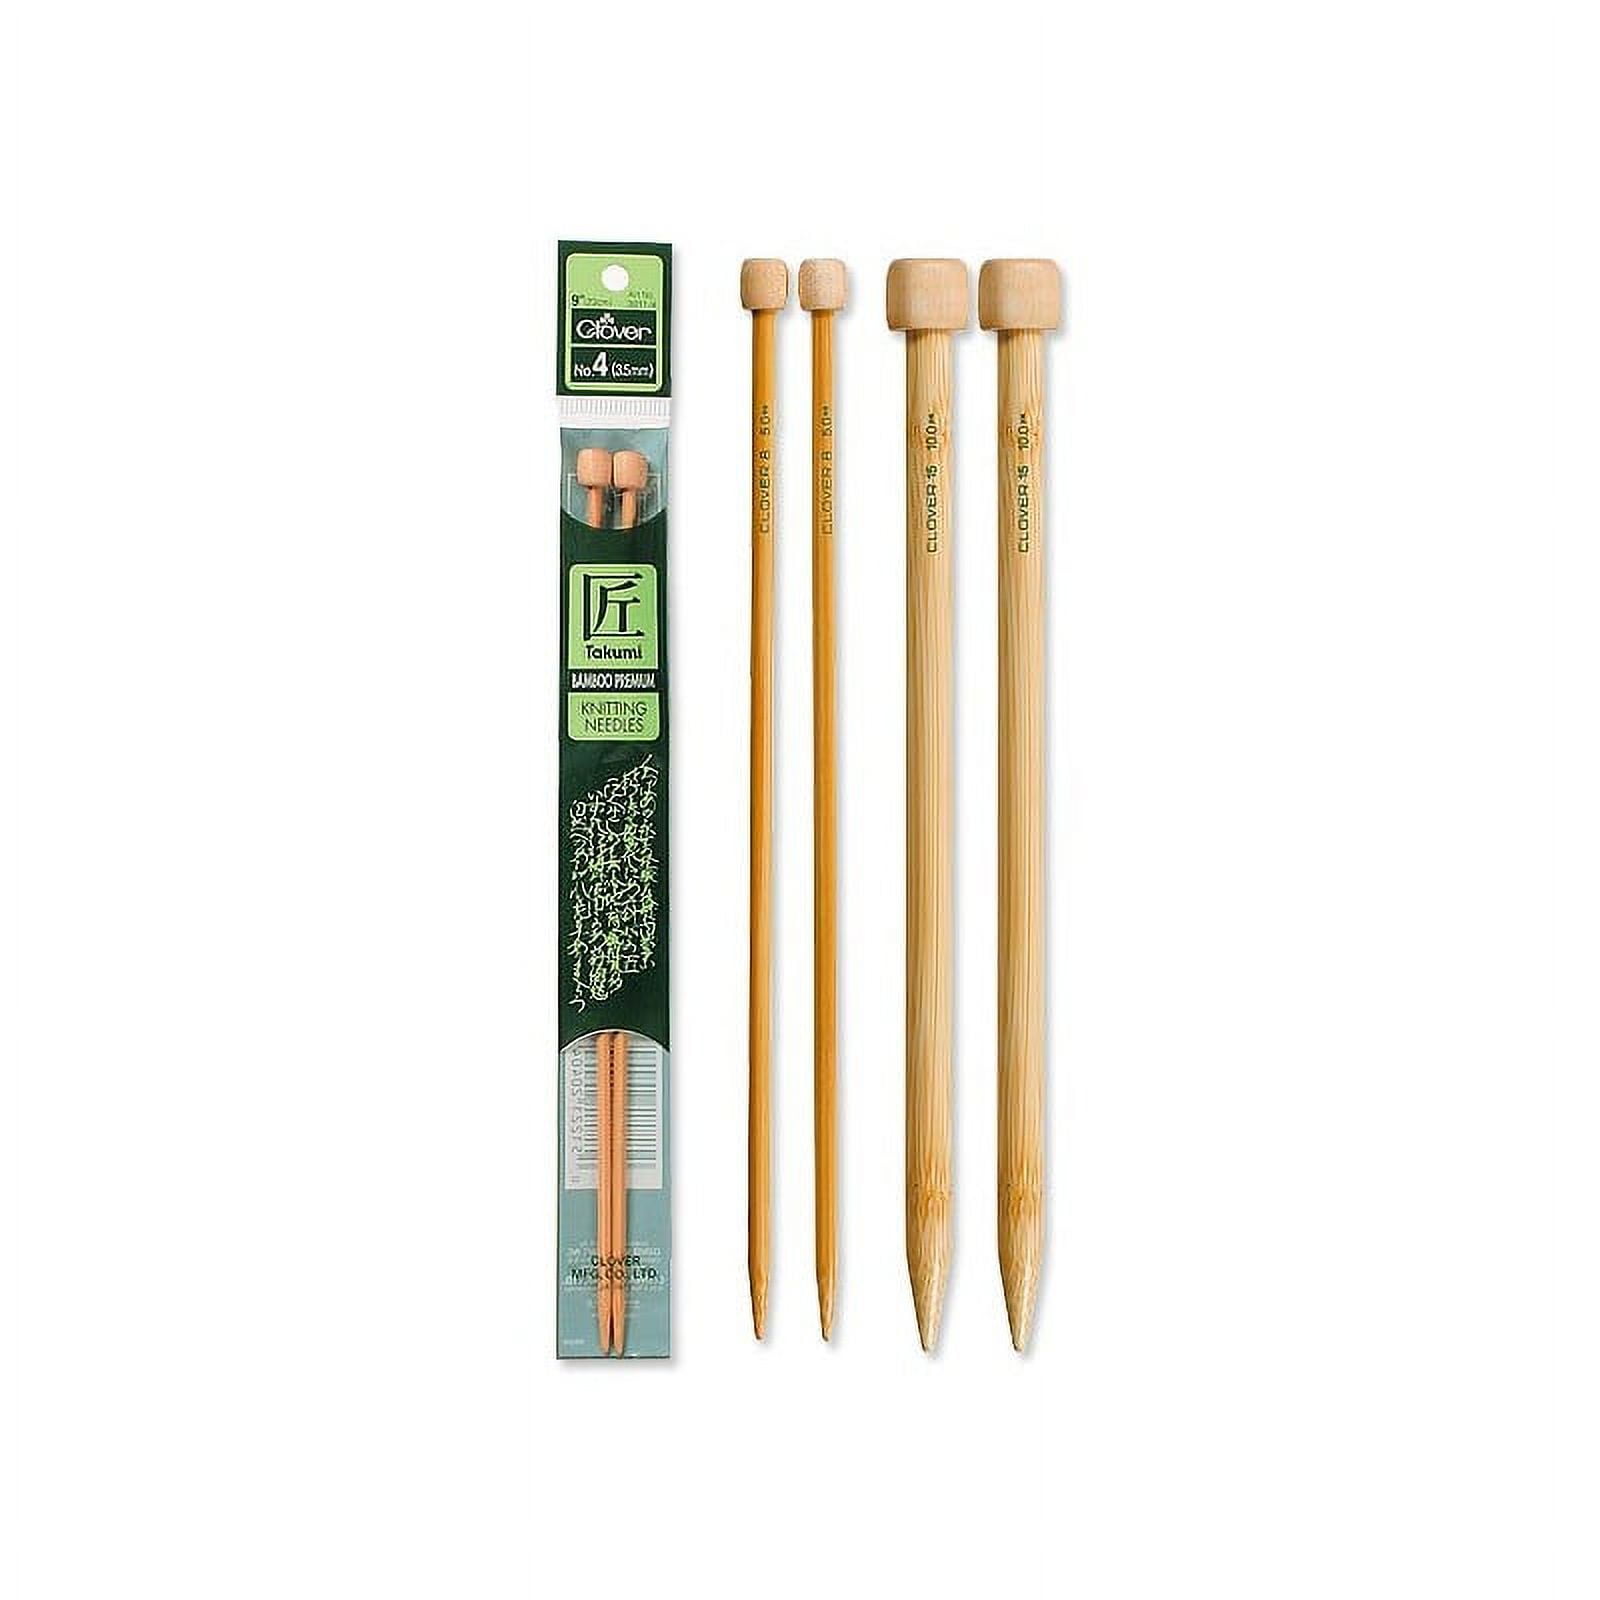 NEW Lion Brand Yarns Bamboo Circular Knitting Needles Size 7 (4.5mm)  29"